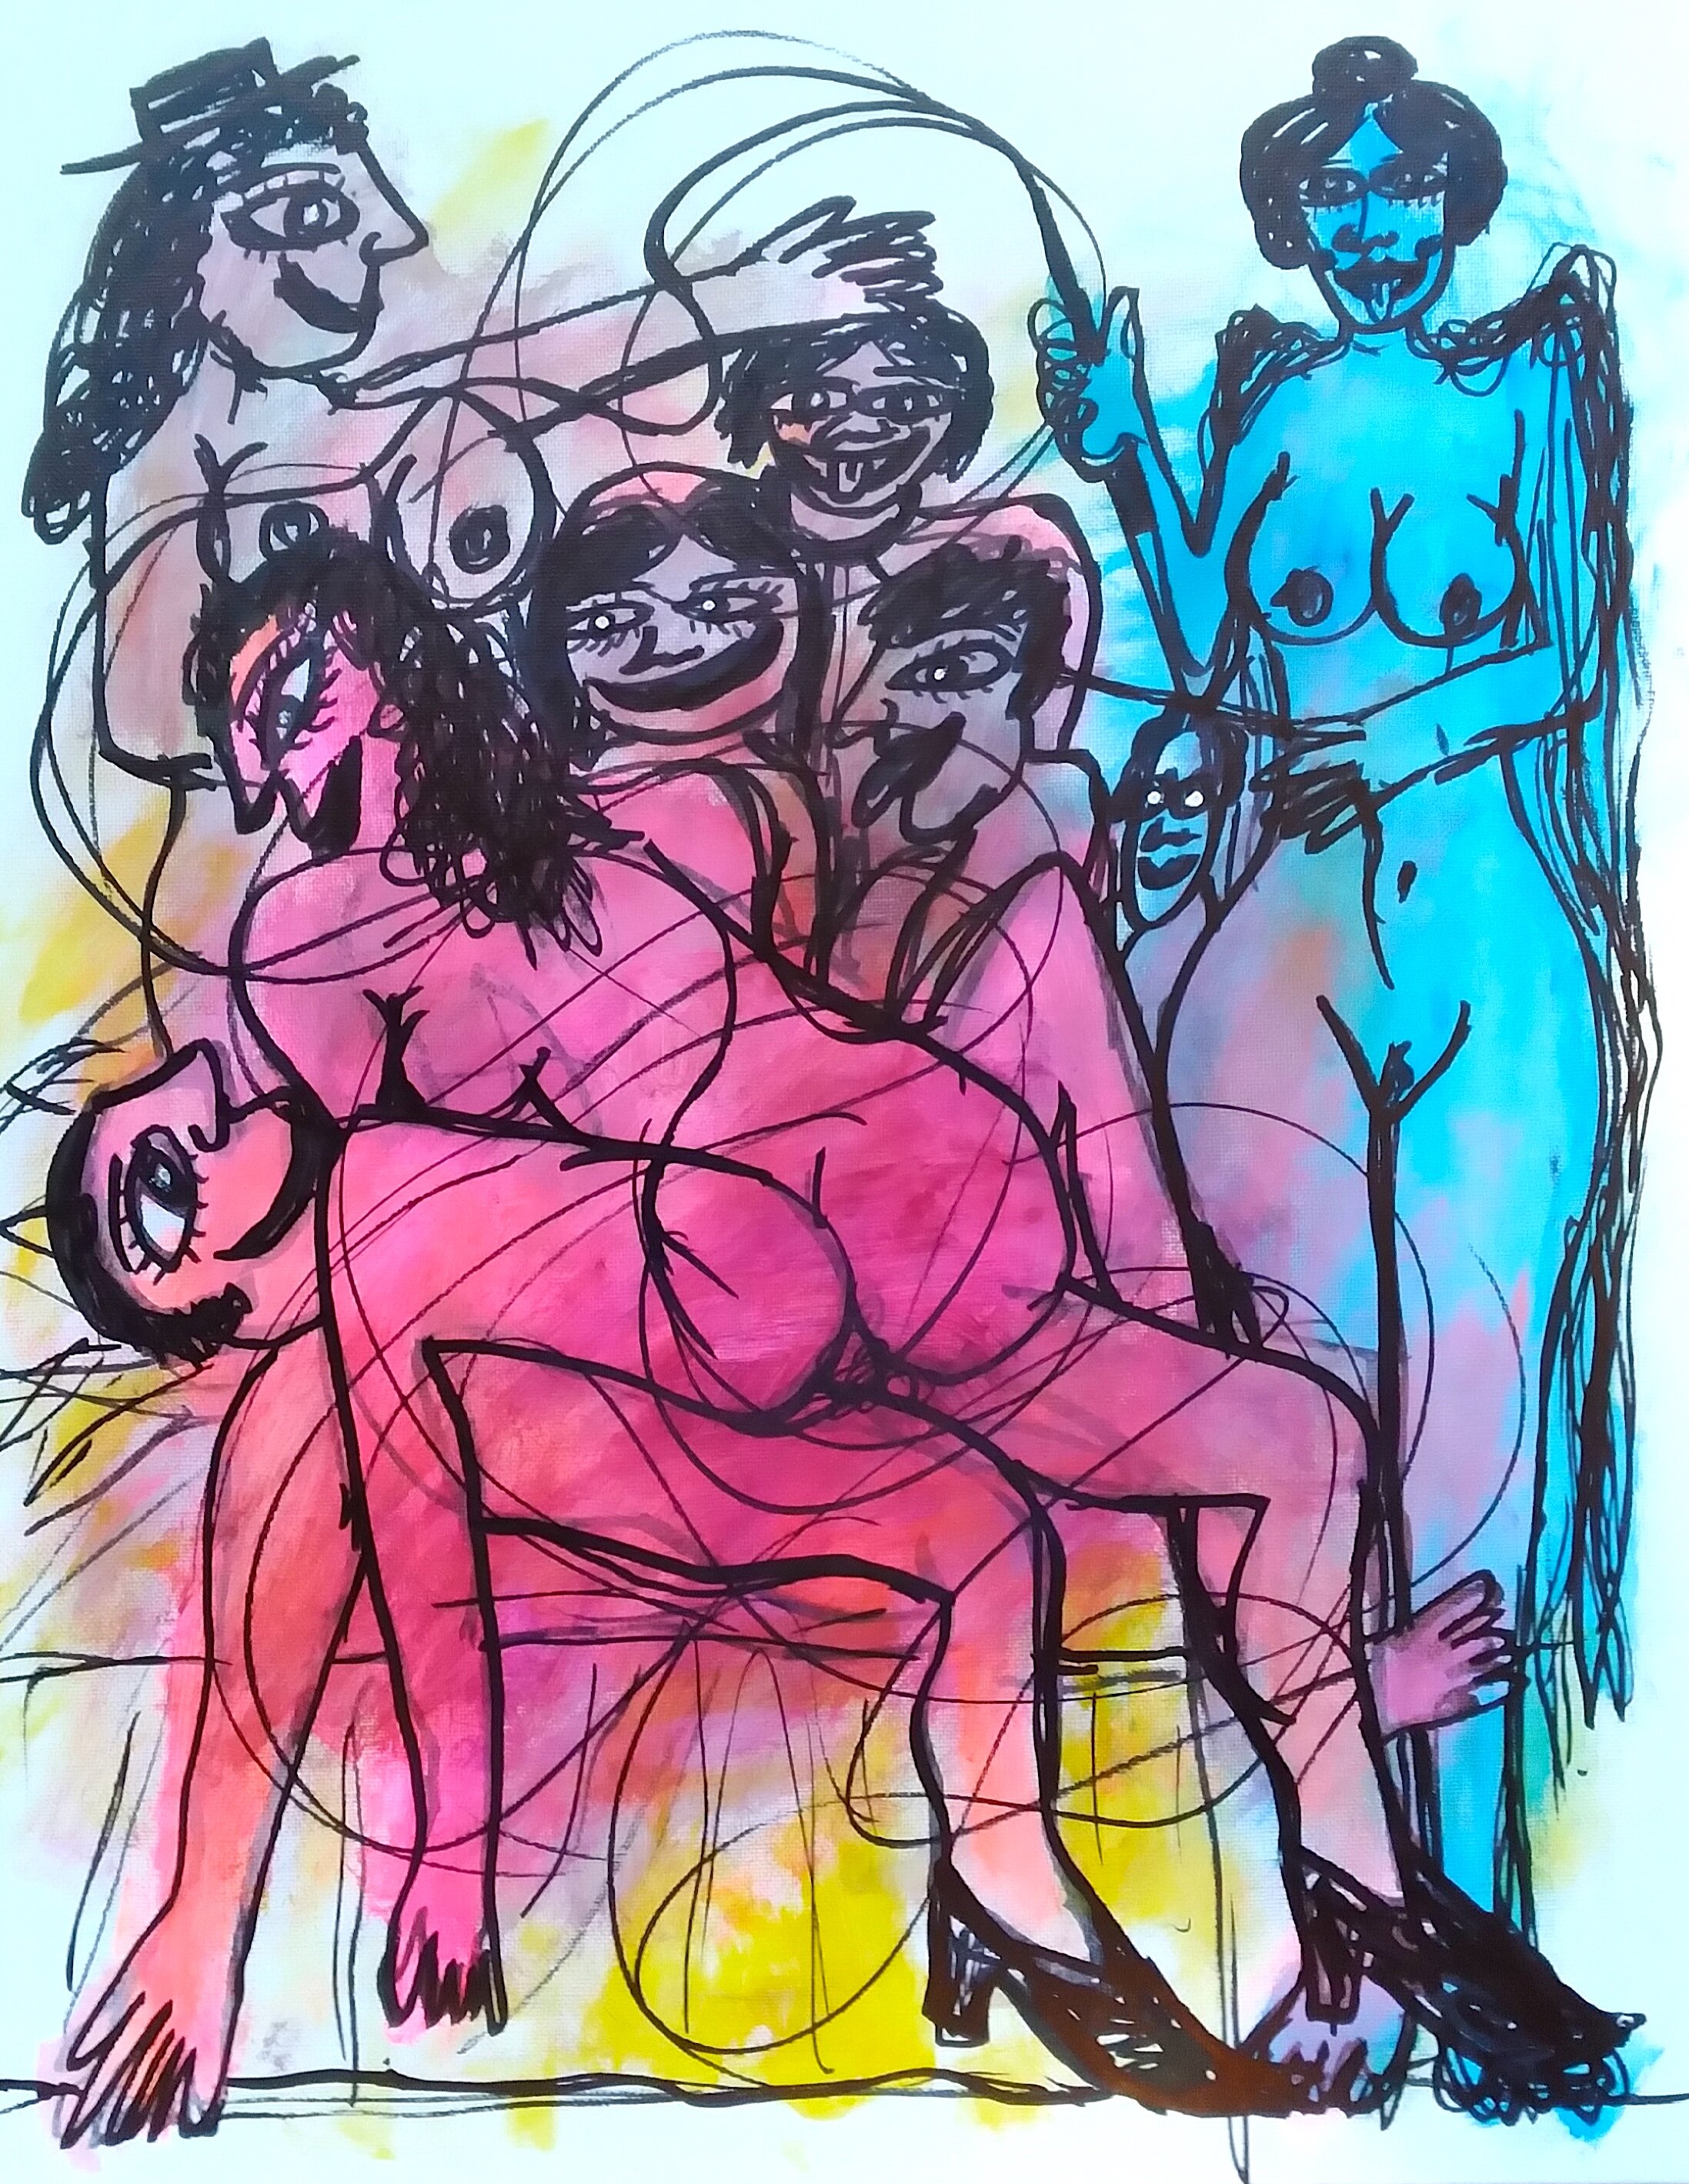 8 1/2 (After Fellini), 2019. Oil, acrylic, ink on canvas. 20” x 16”.